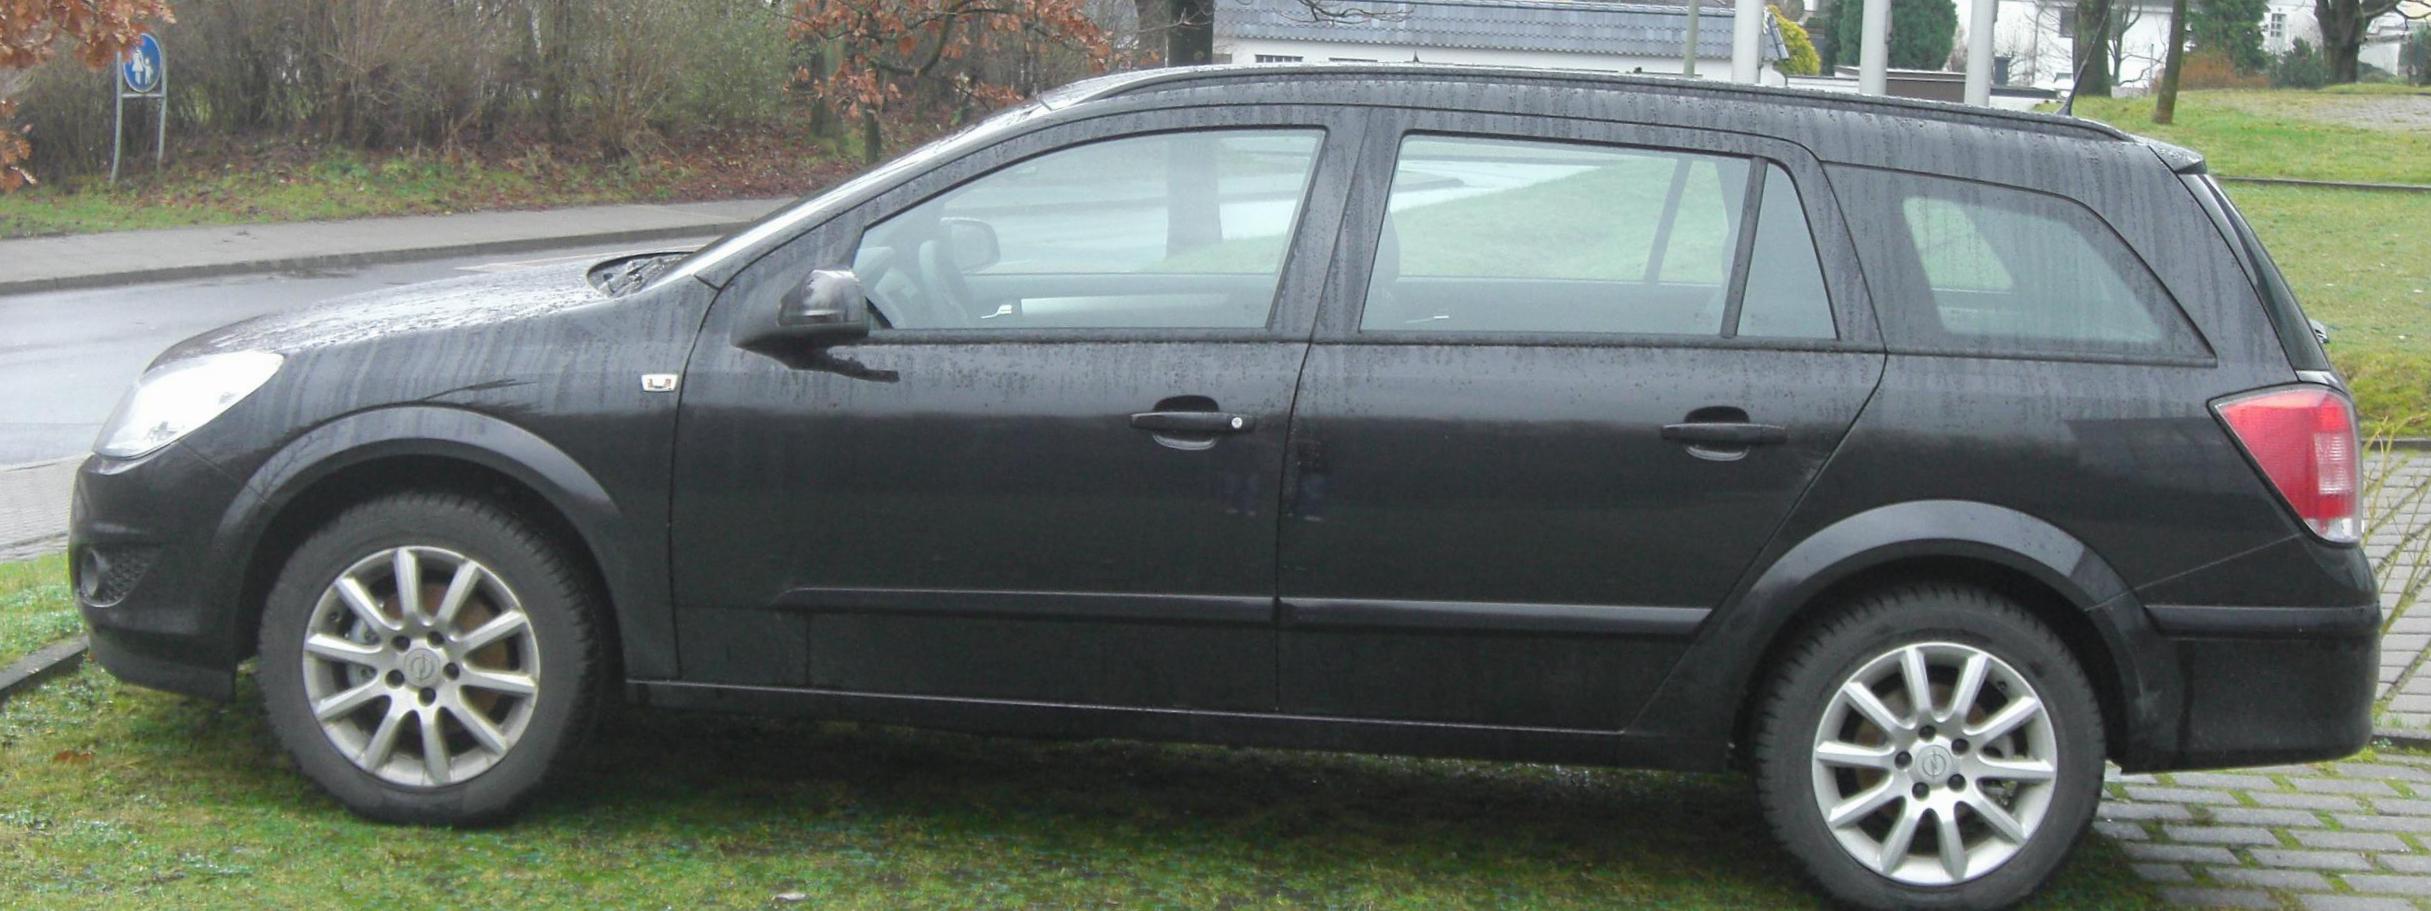 Opel Astra H Caravan Specifications sedan